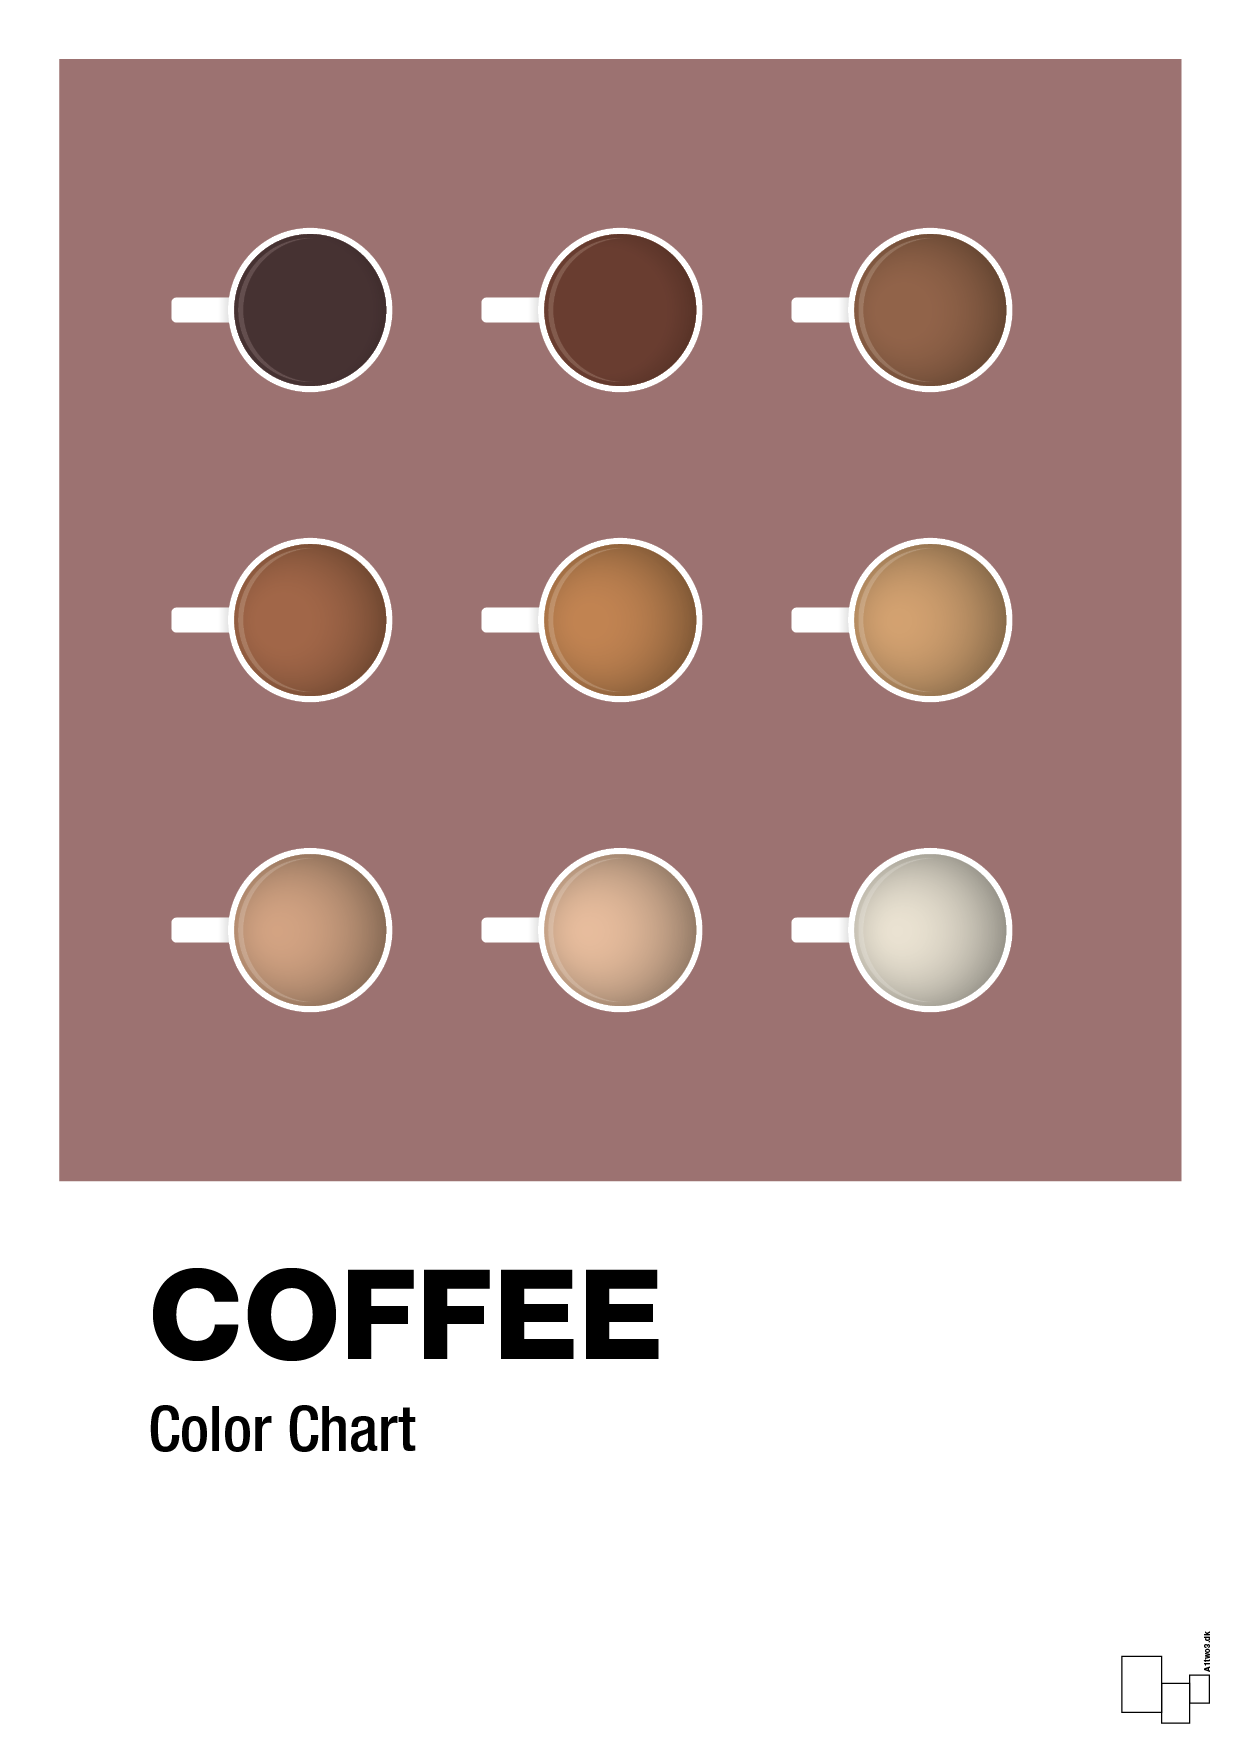 coffee color chart - Plakat med Mad & Drikke i Plum